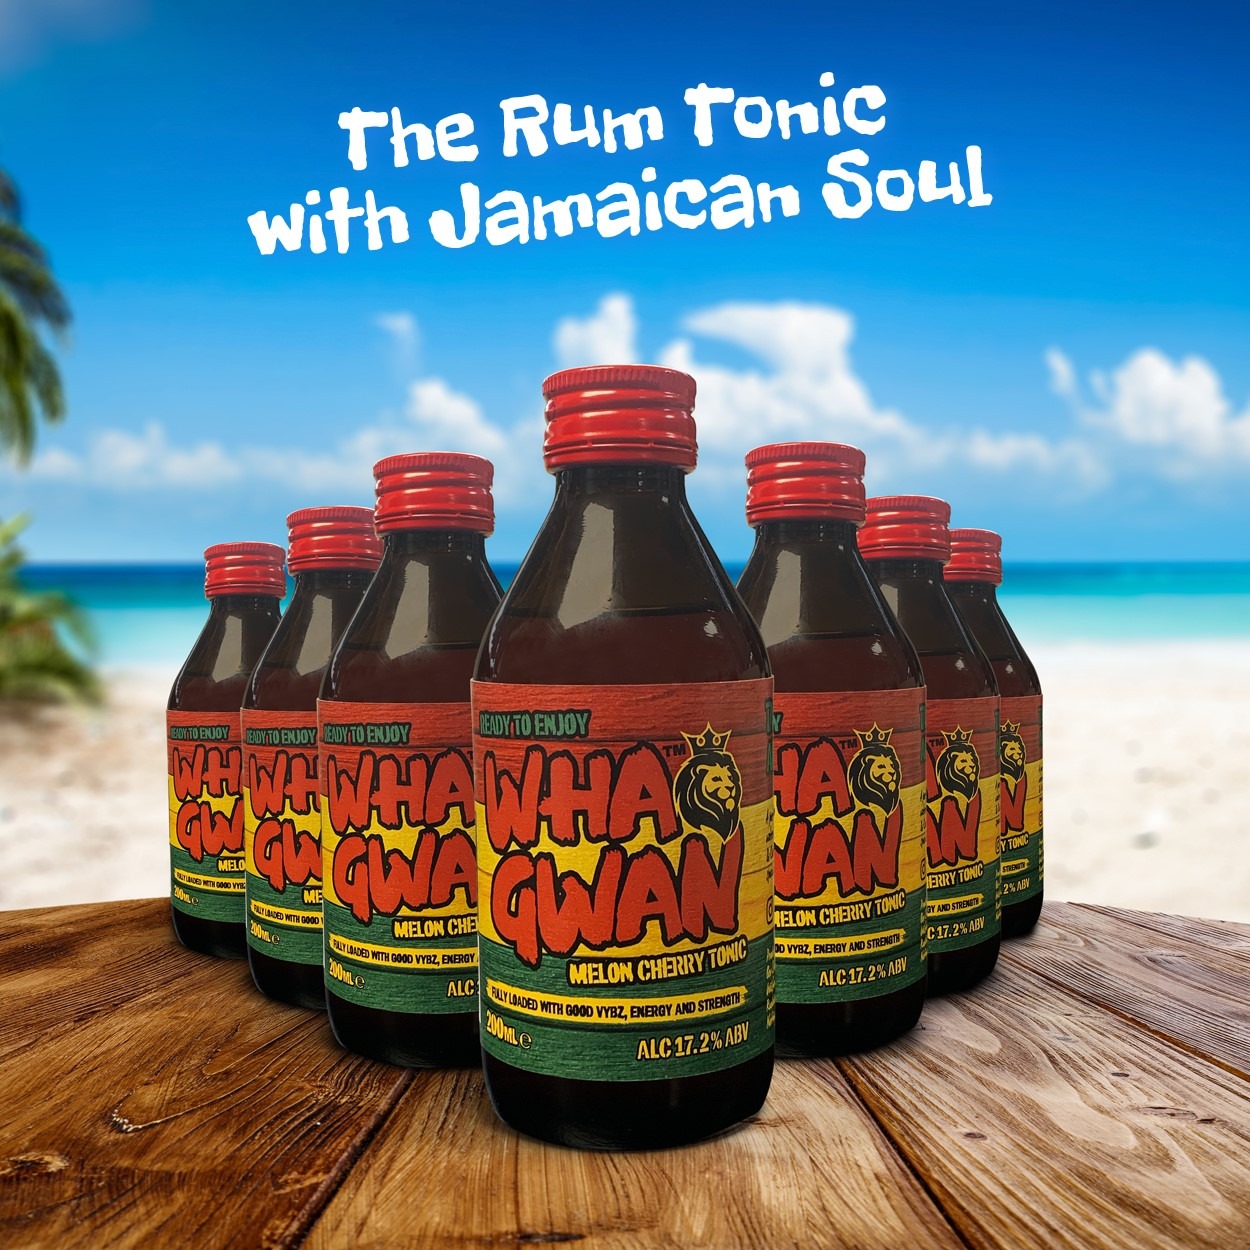 Purchase one of Wha Gwans rum tonics